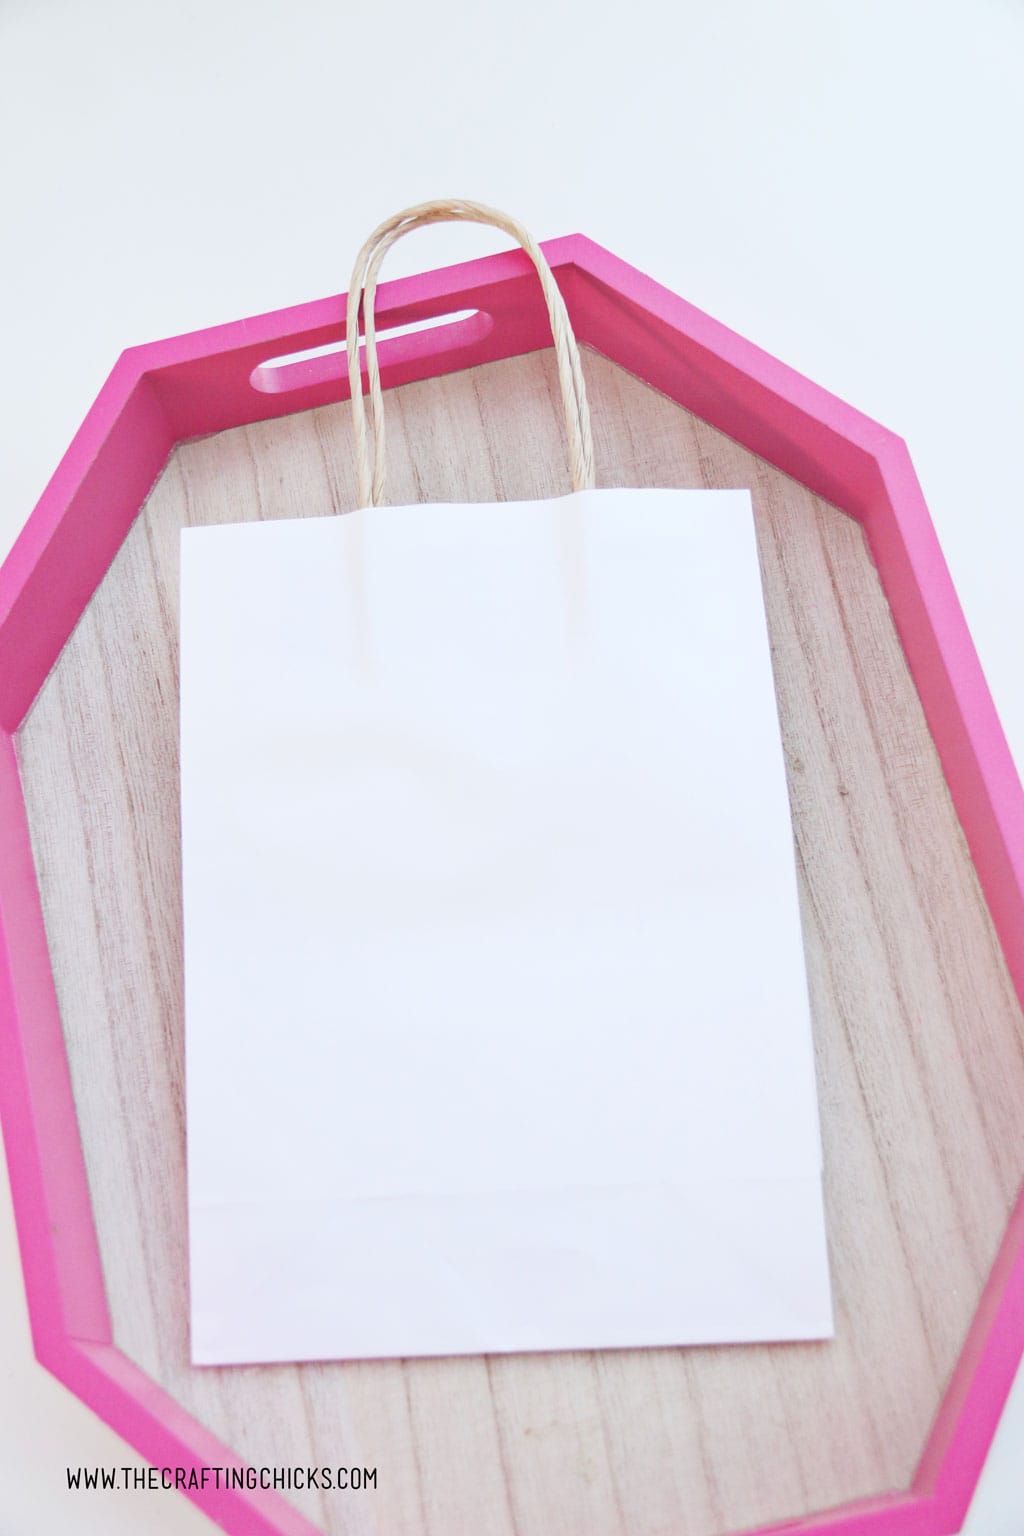 White gift bag on pink tray to make Hello Kitty DIY Gift Bags